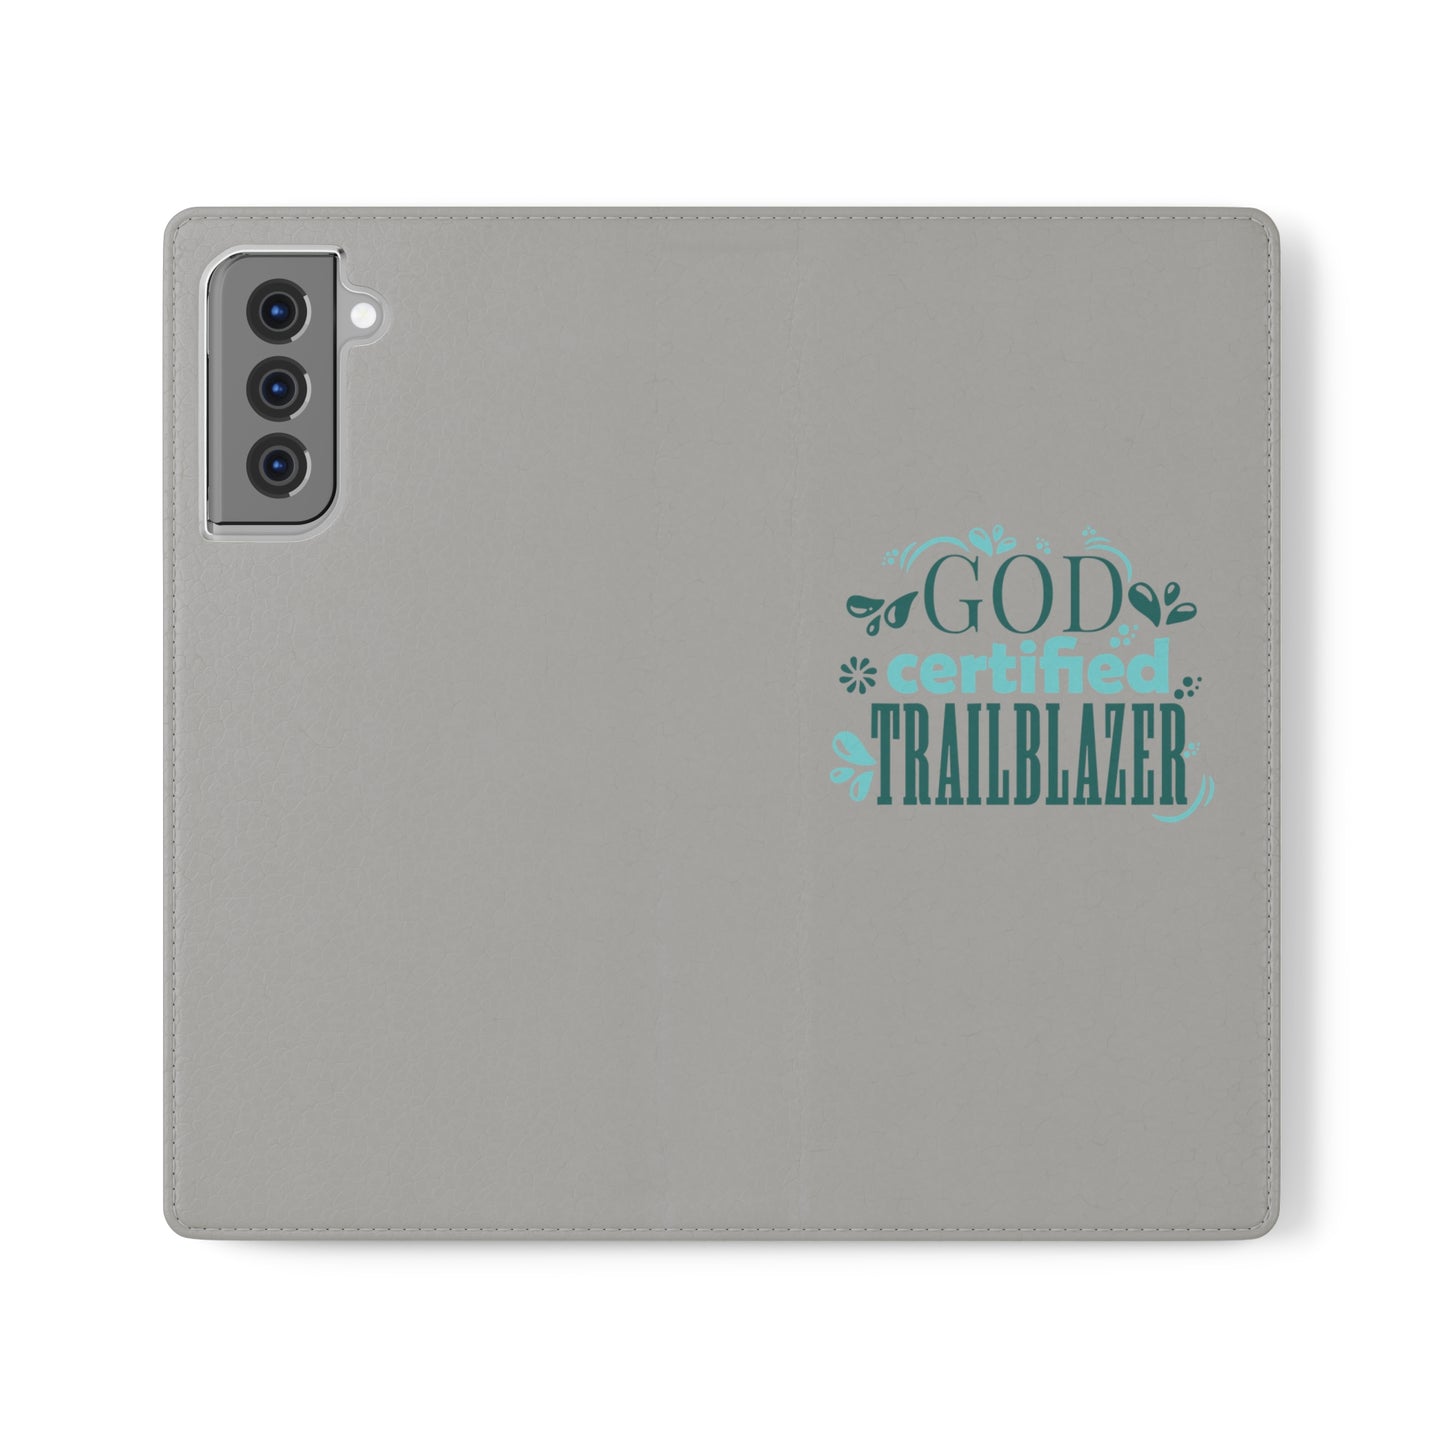 God Certified Trailblazer Phone Flip Cases